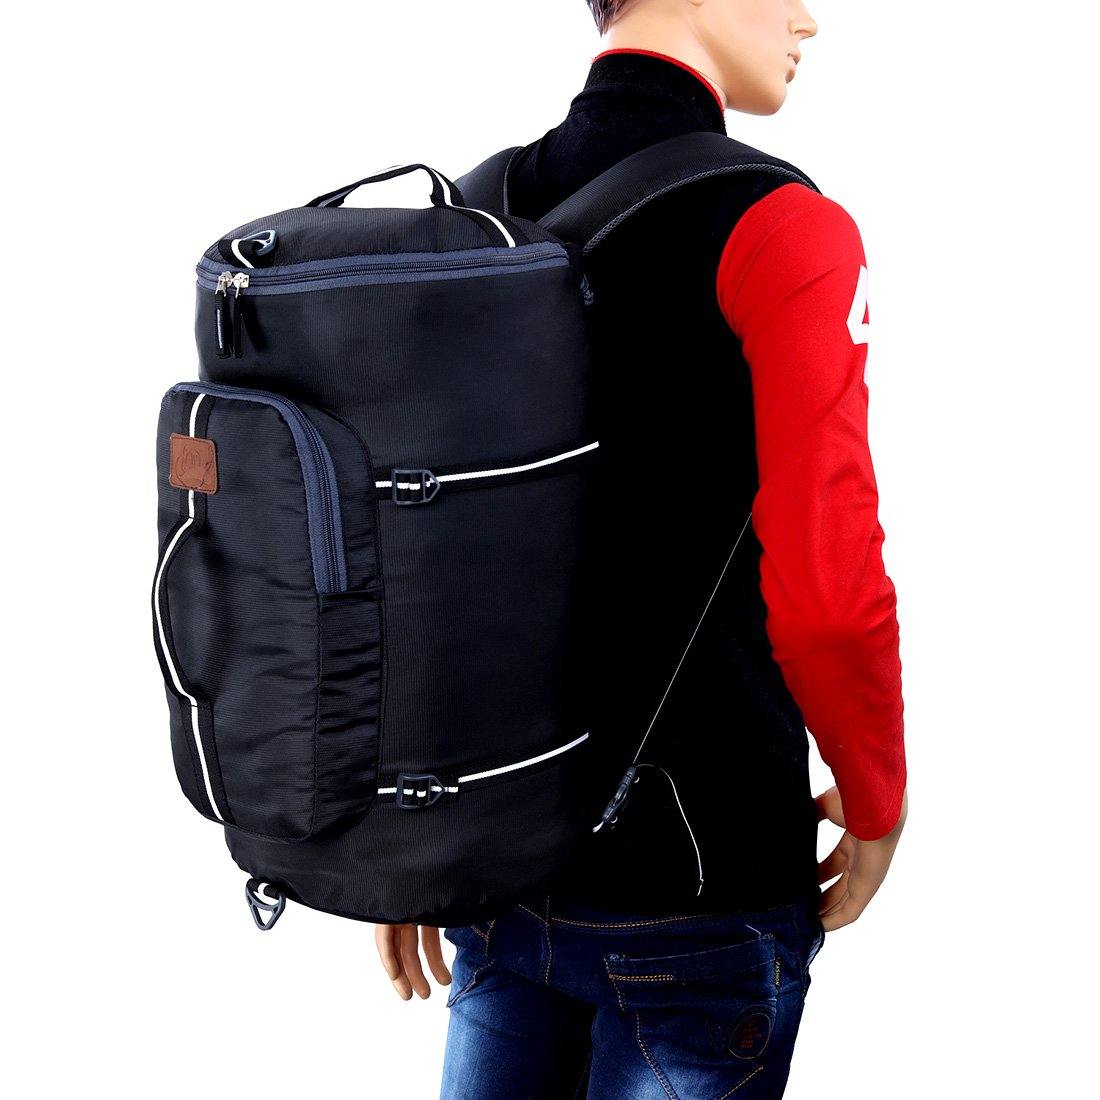 Black Nylon Unisex Casual Adventure Companion Trekking Rucksack Bag